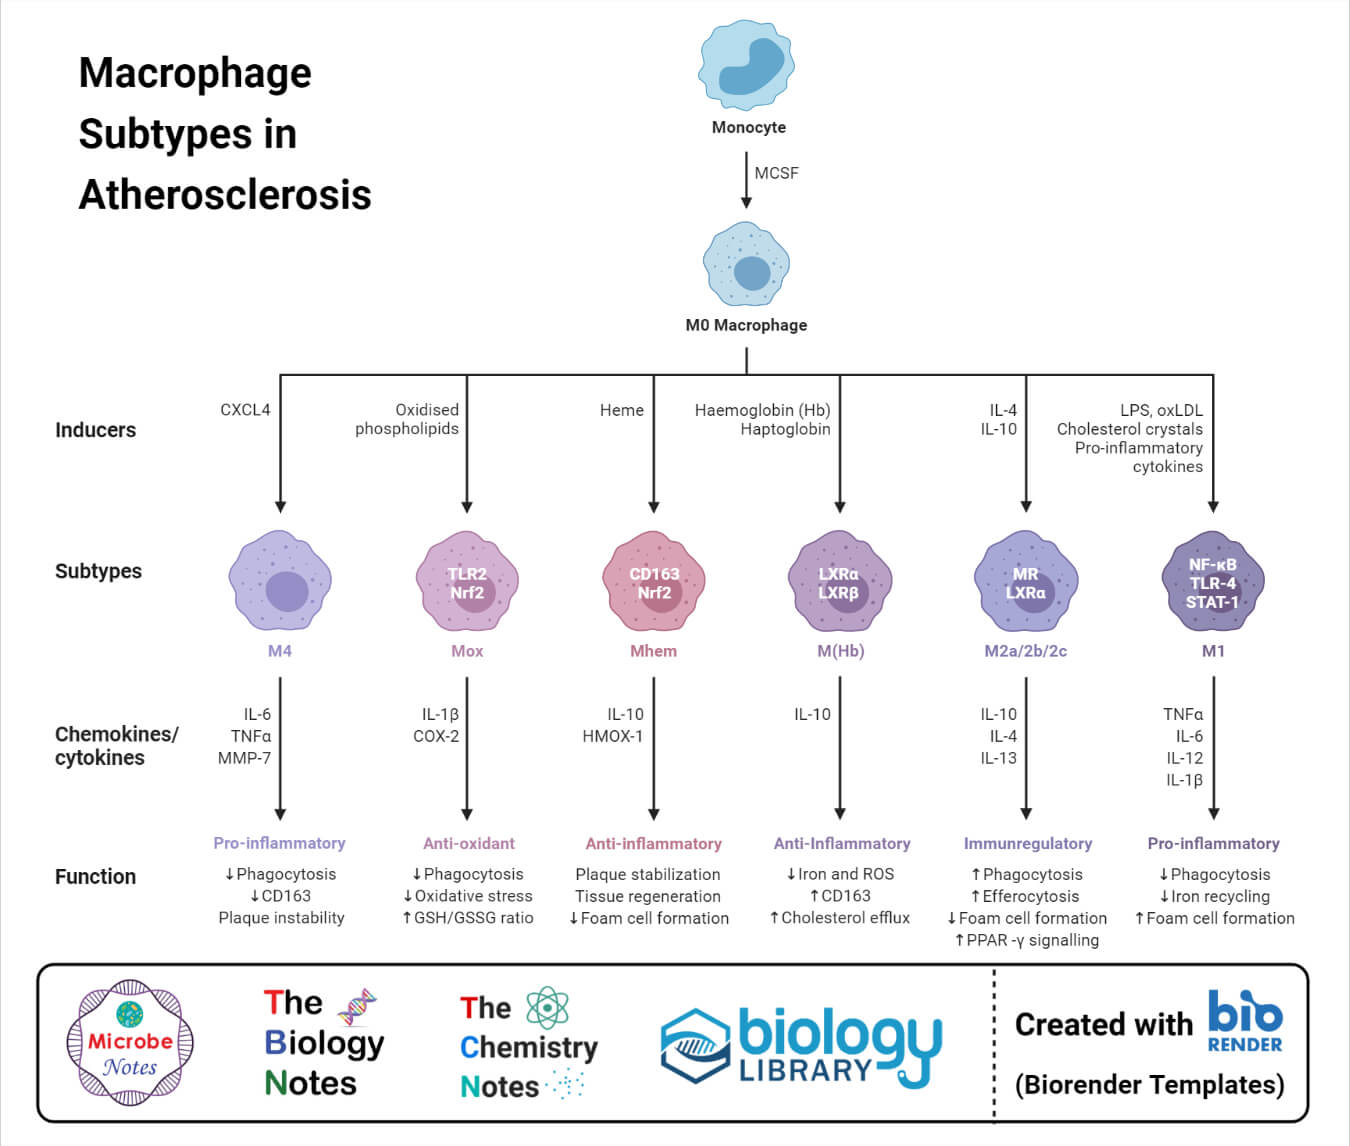 Macrophage Subtypes in Atherosclerosis